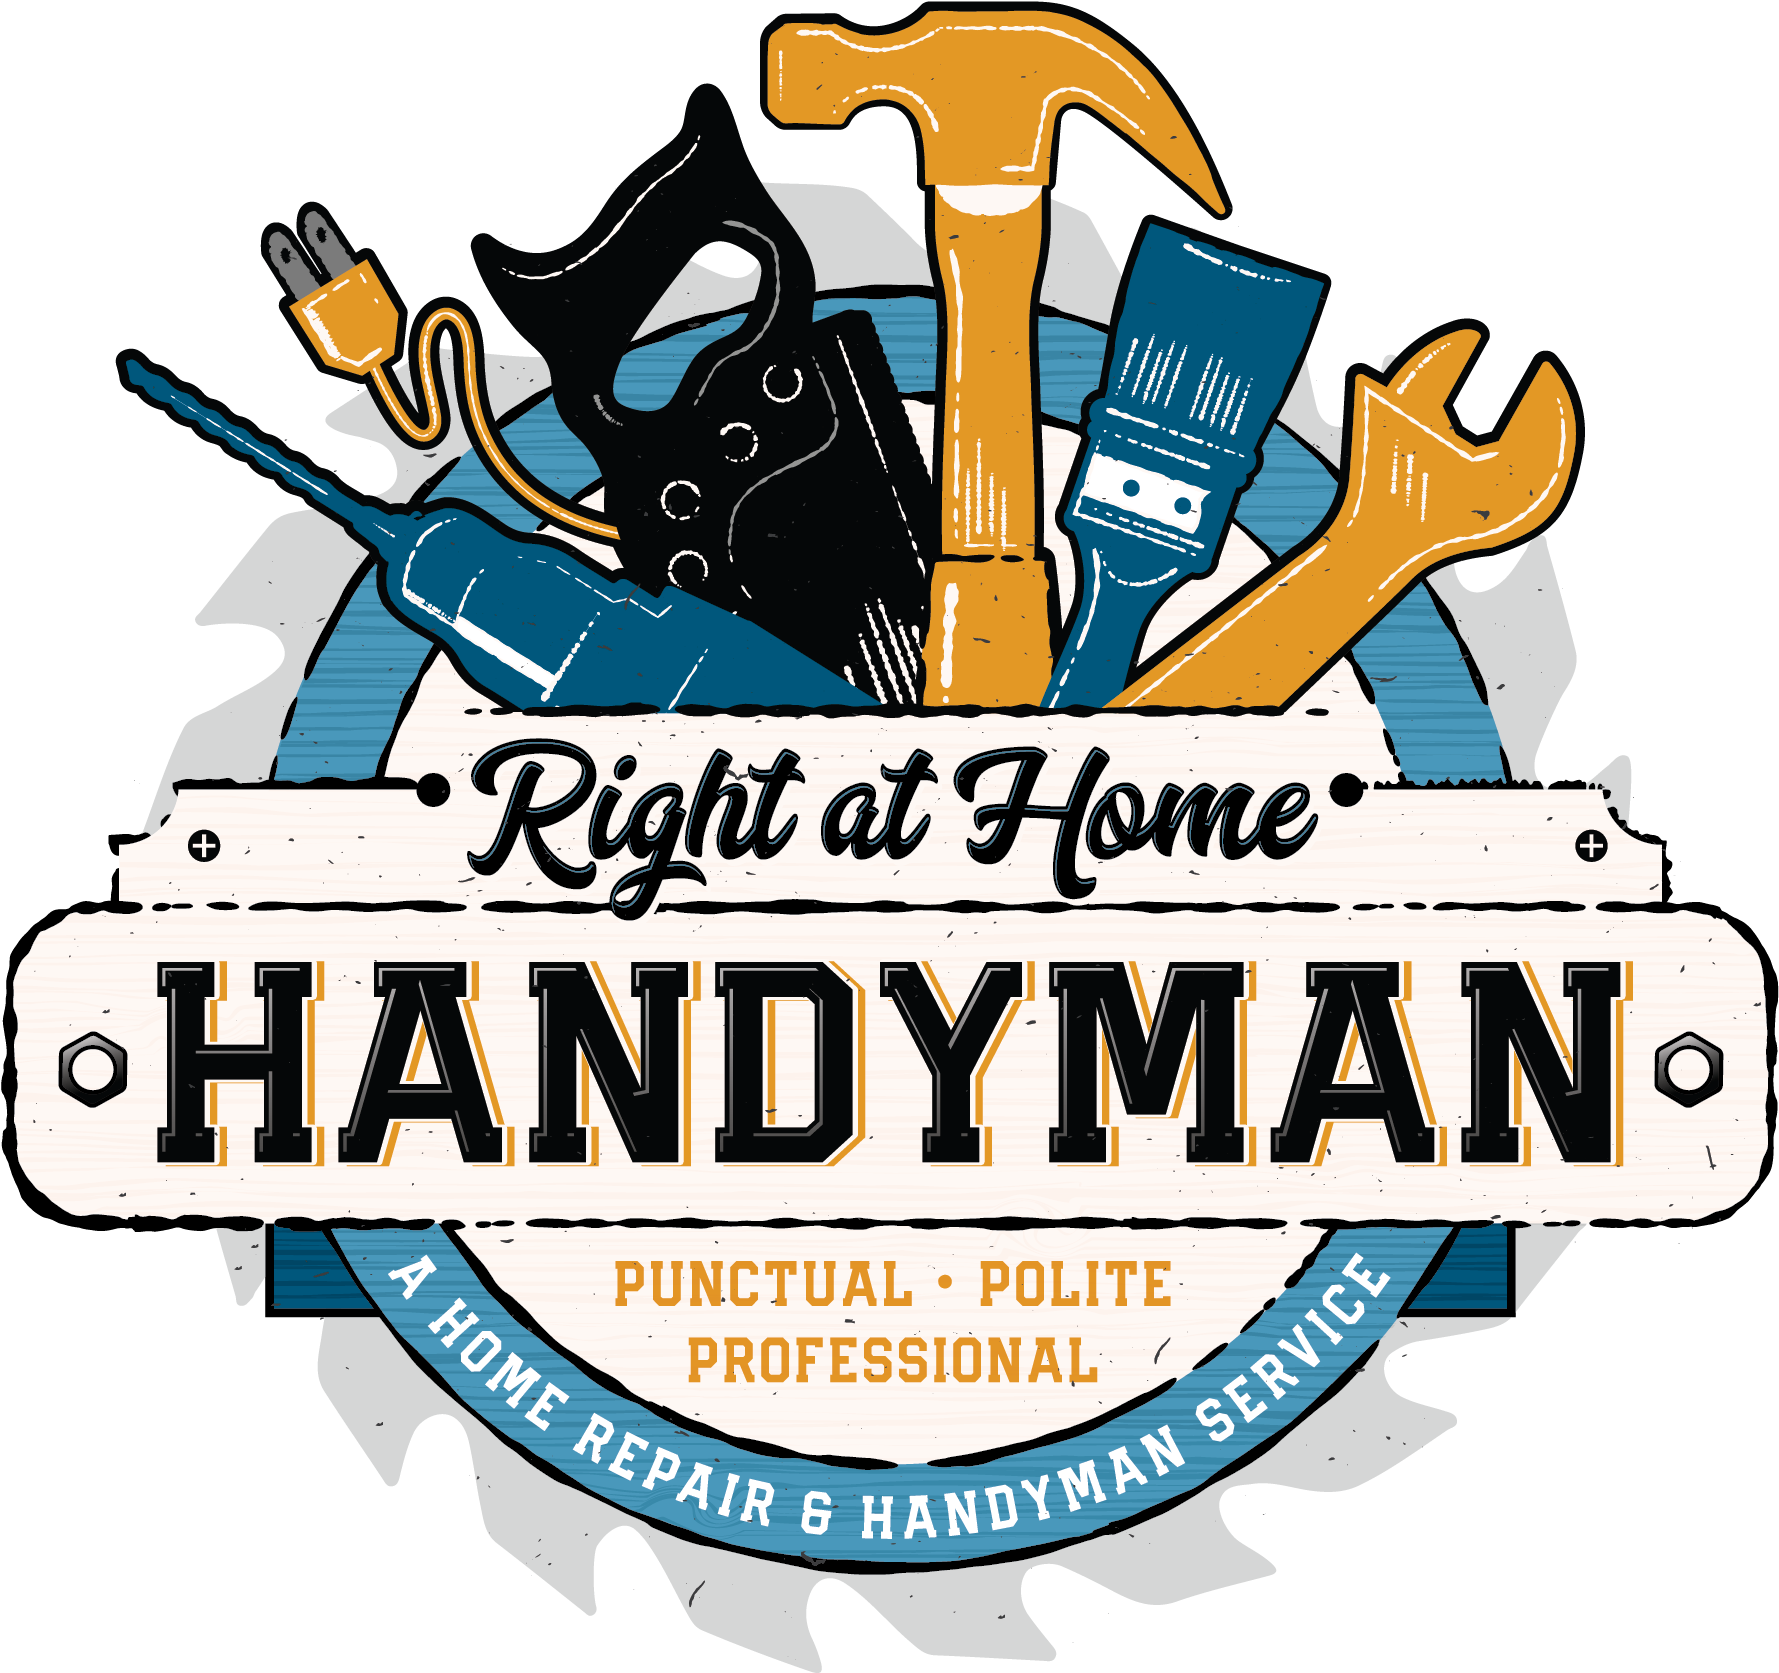 Handyman Service Logo